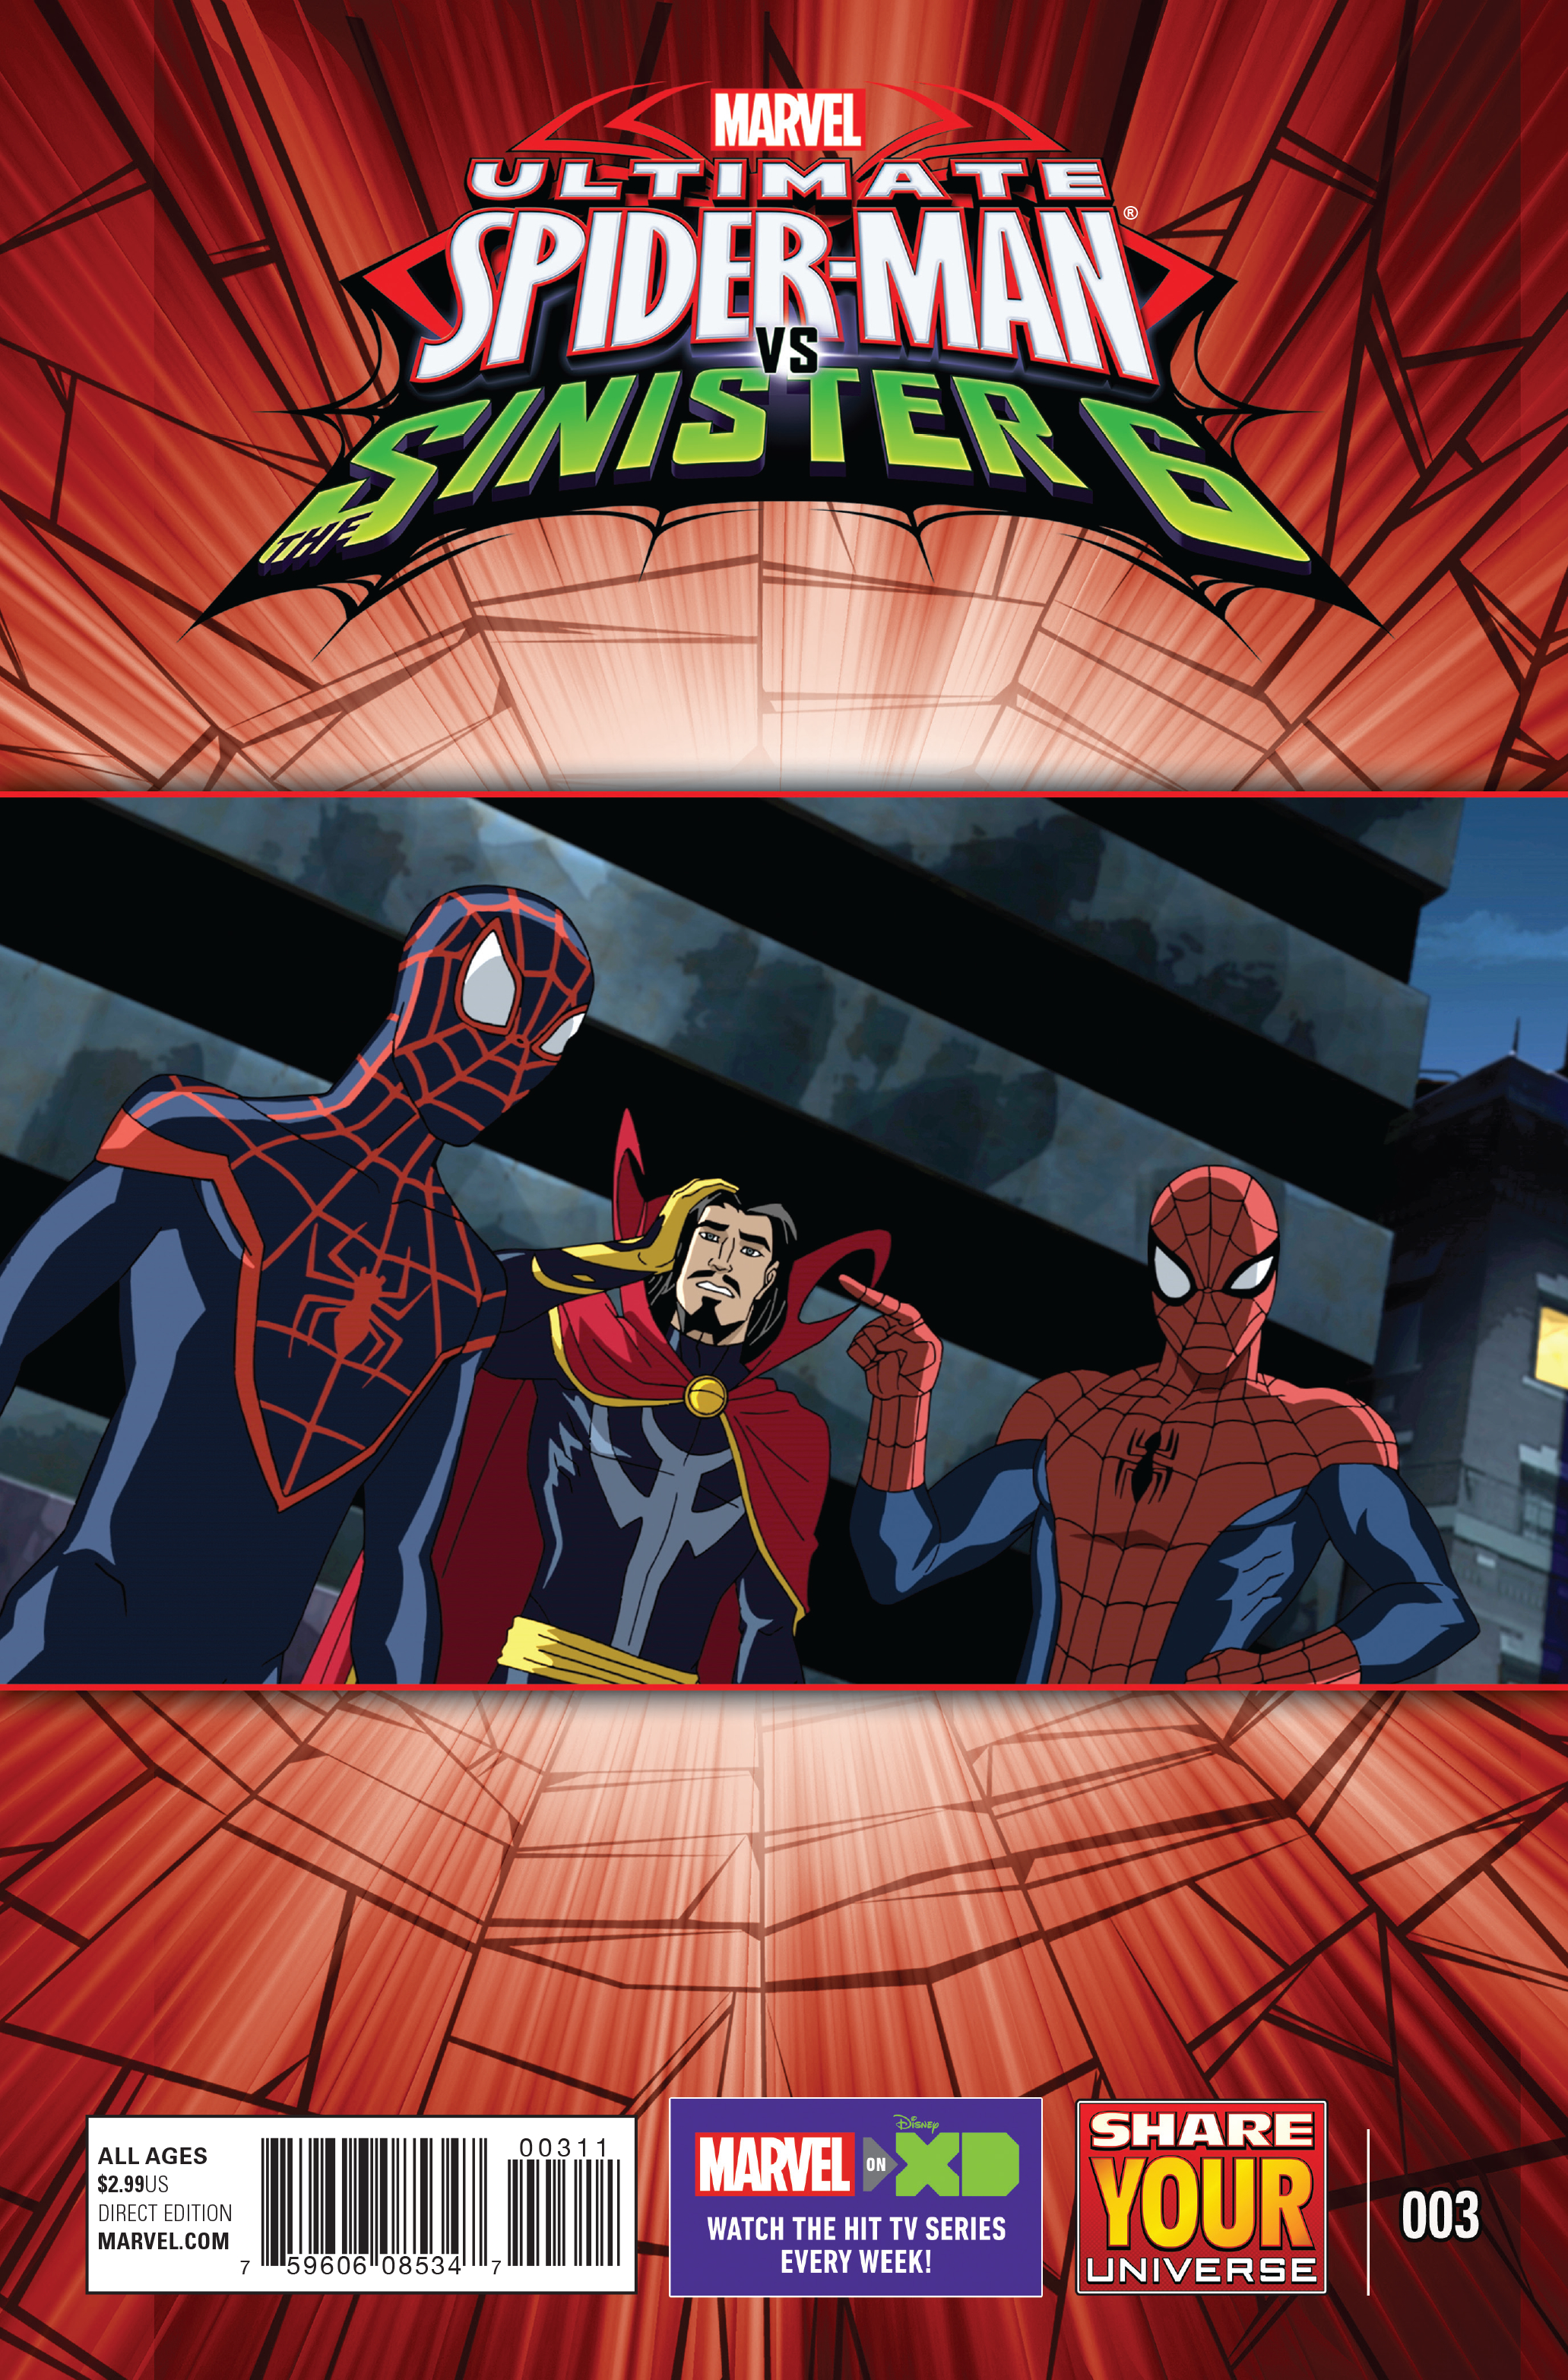 MARVEL UNIVERSE ULT SPIDER-MAN VS SINISTER SIX #3